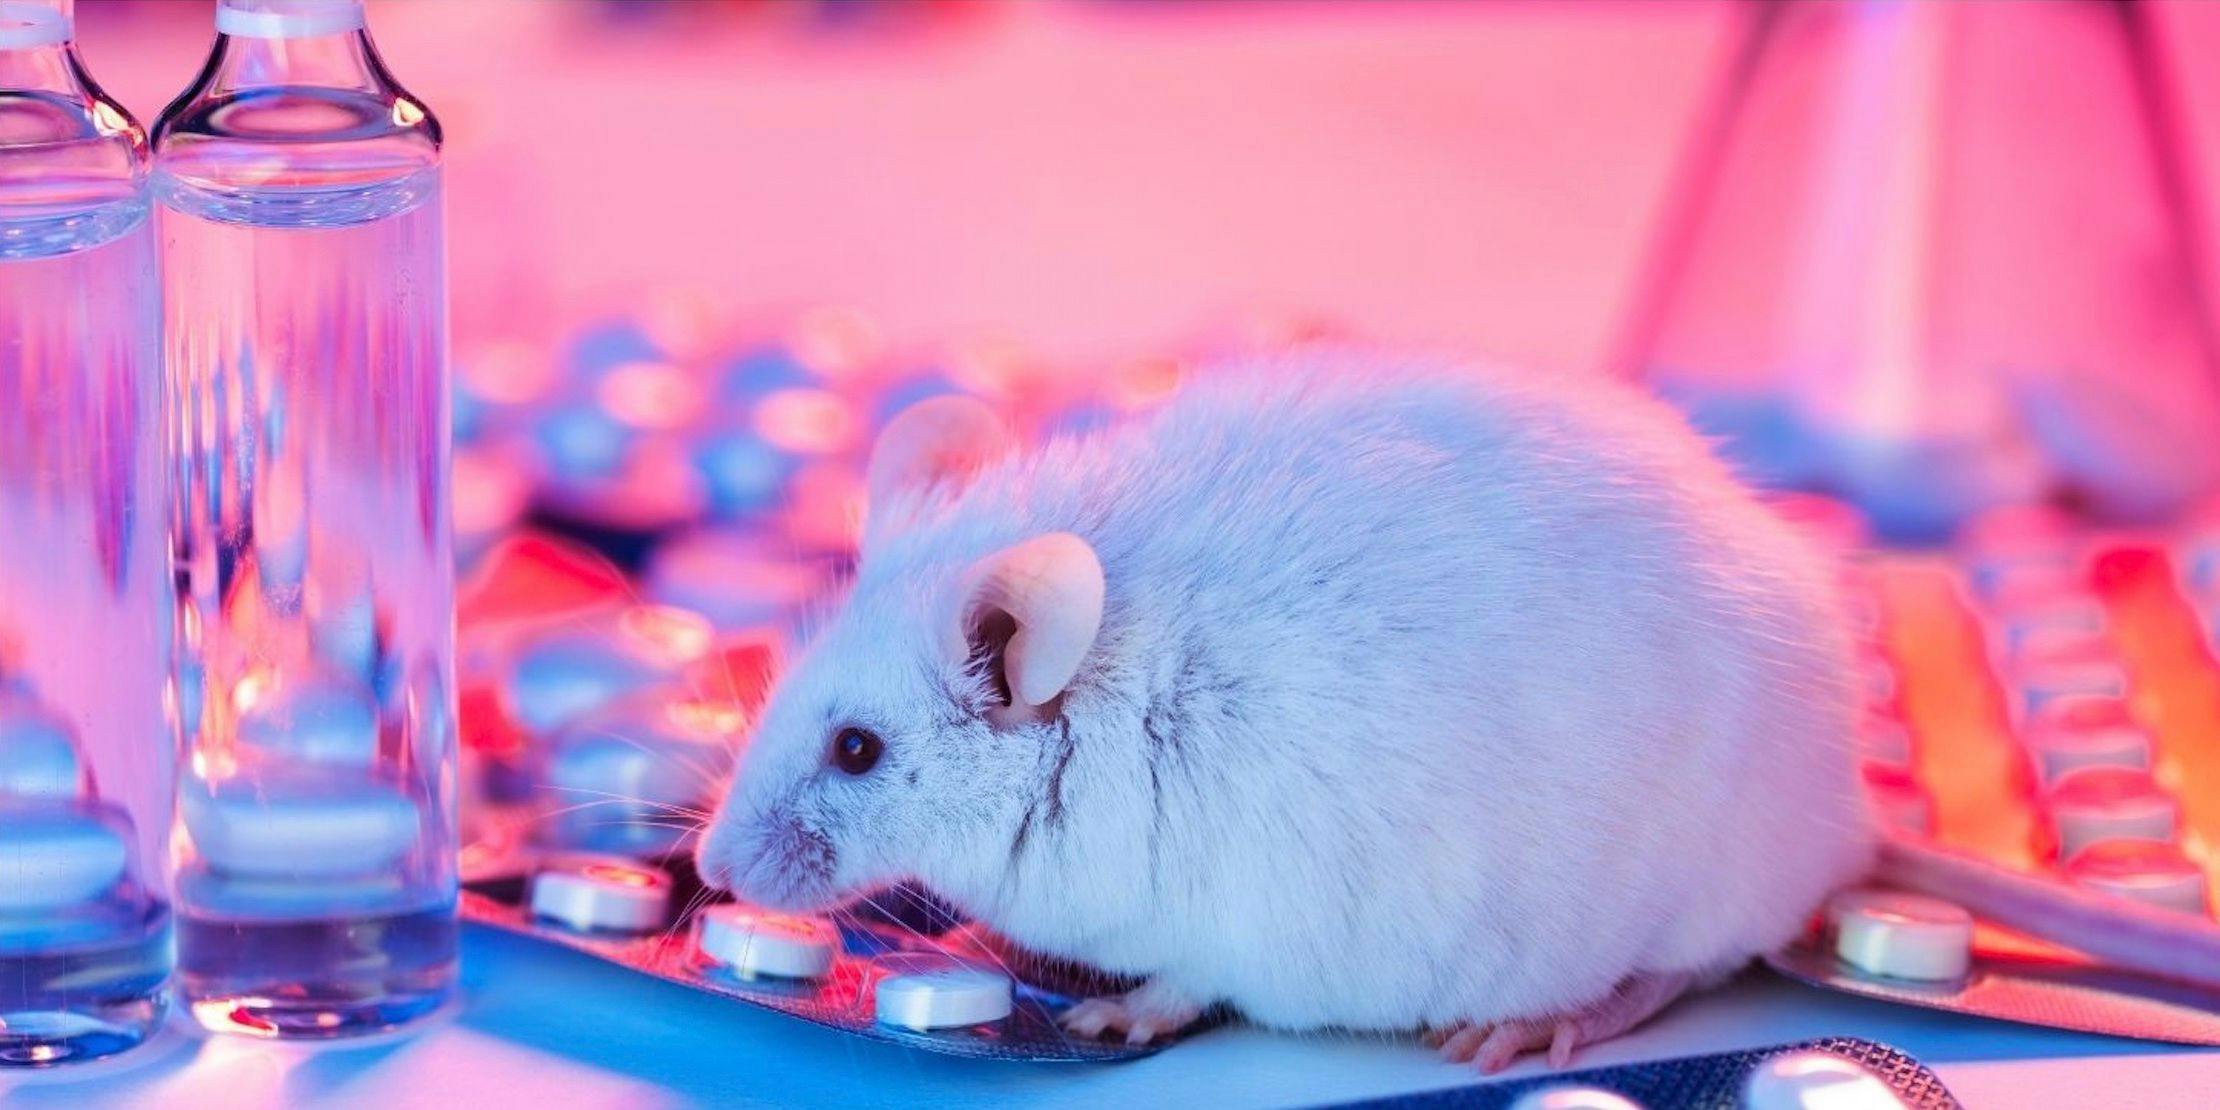 mice study 